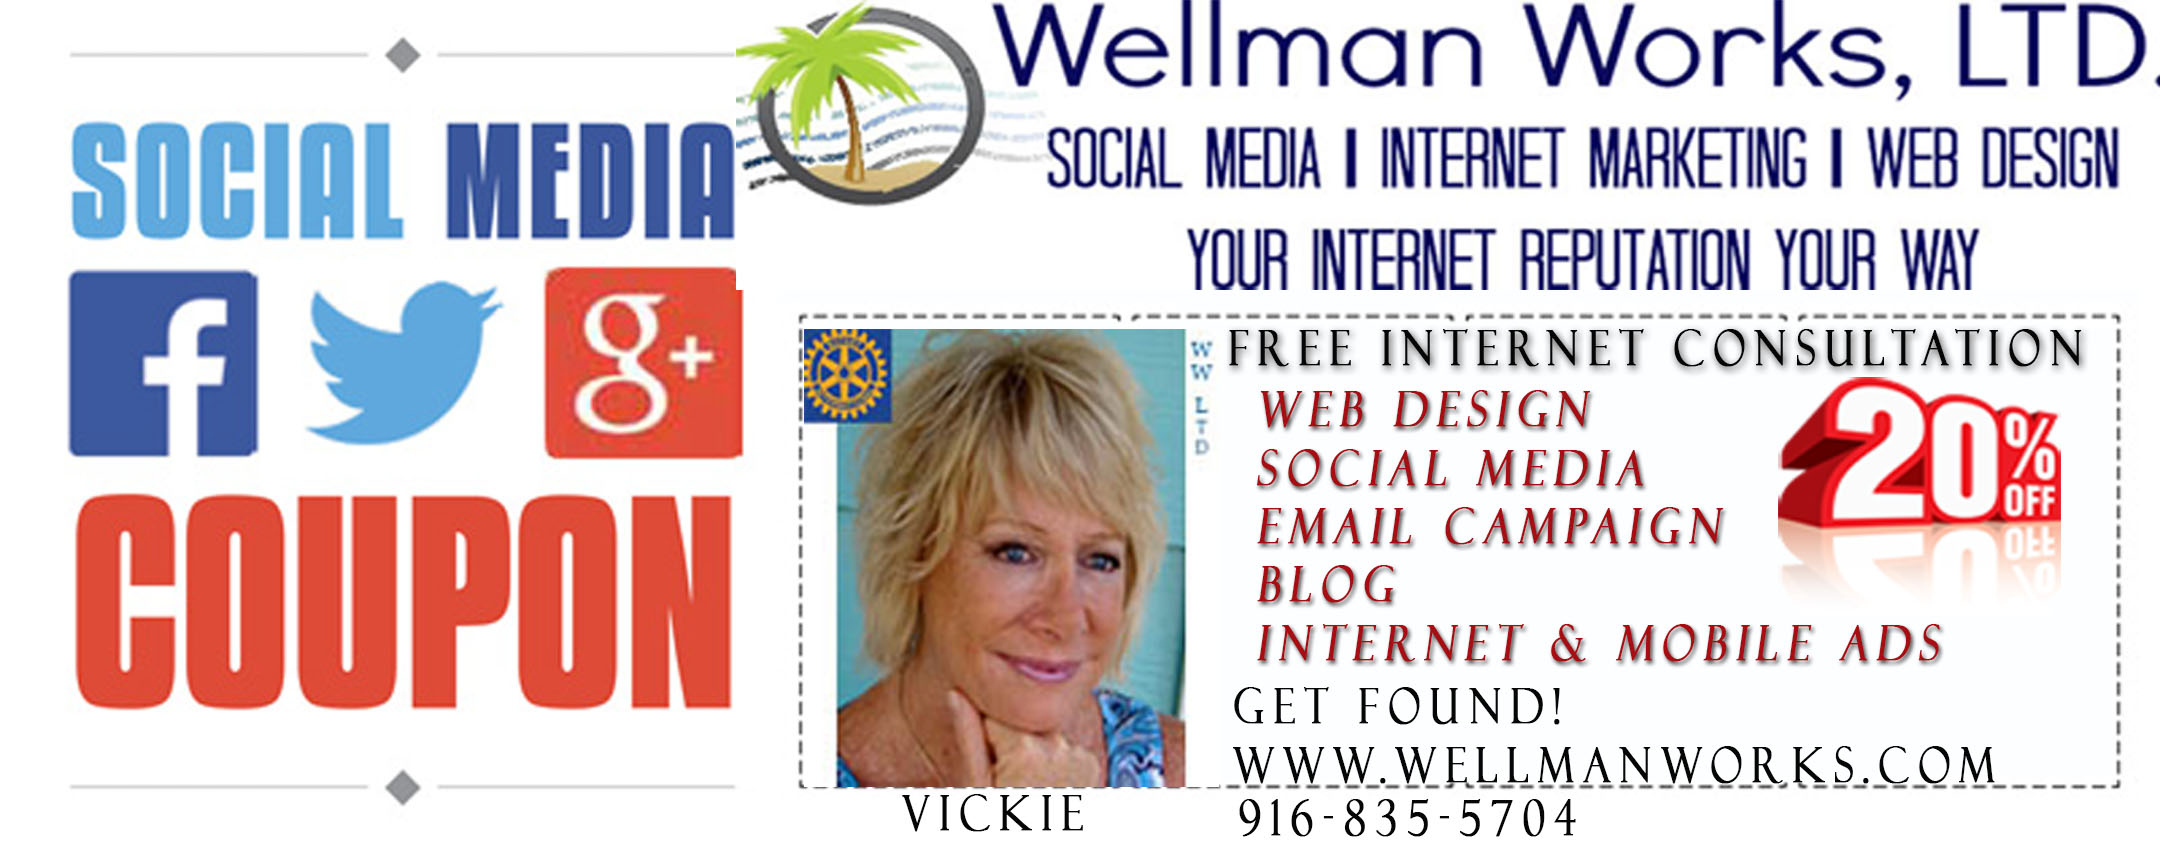 Social Media, Internet Marketing, Facebook, Google+, Twitter, LinkedIn, Web Design